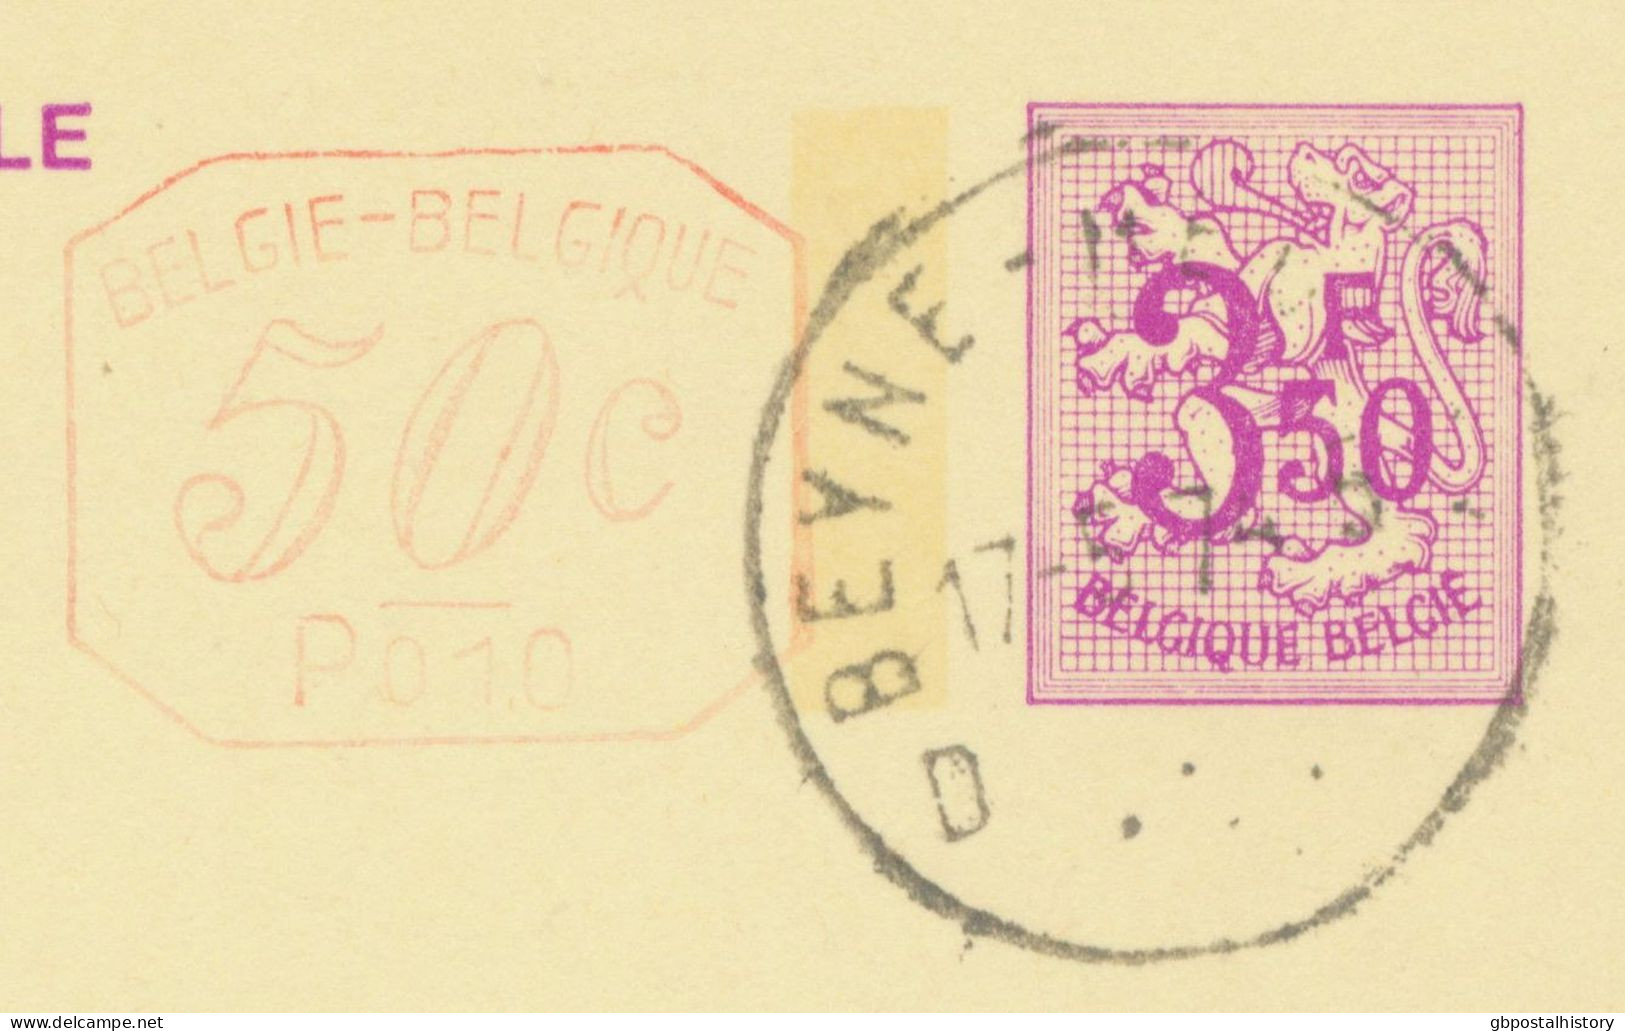 BELGIUM VILLAGE POSTMARKS  BEYNE-HEUSAY D SC With Dots 1974 (Postal Stationery 3,50 + 0,50 F, PUBLIBEL 2577 F) To Luxemb - Punktstempel